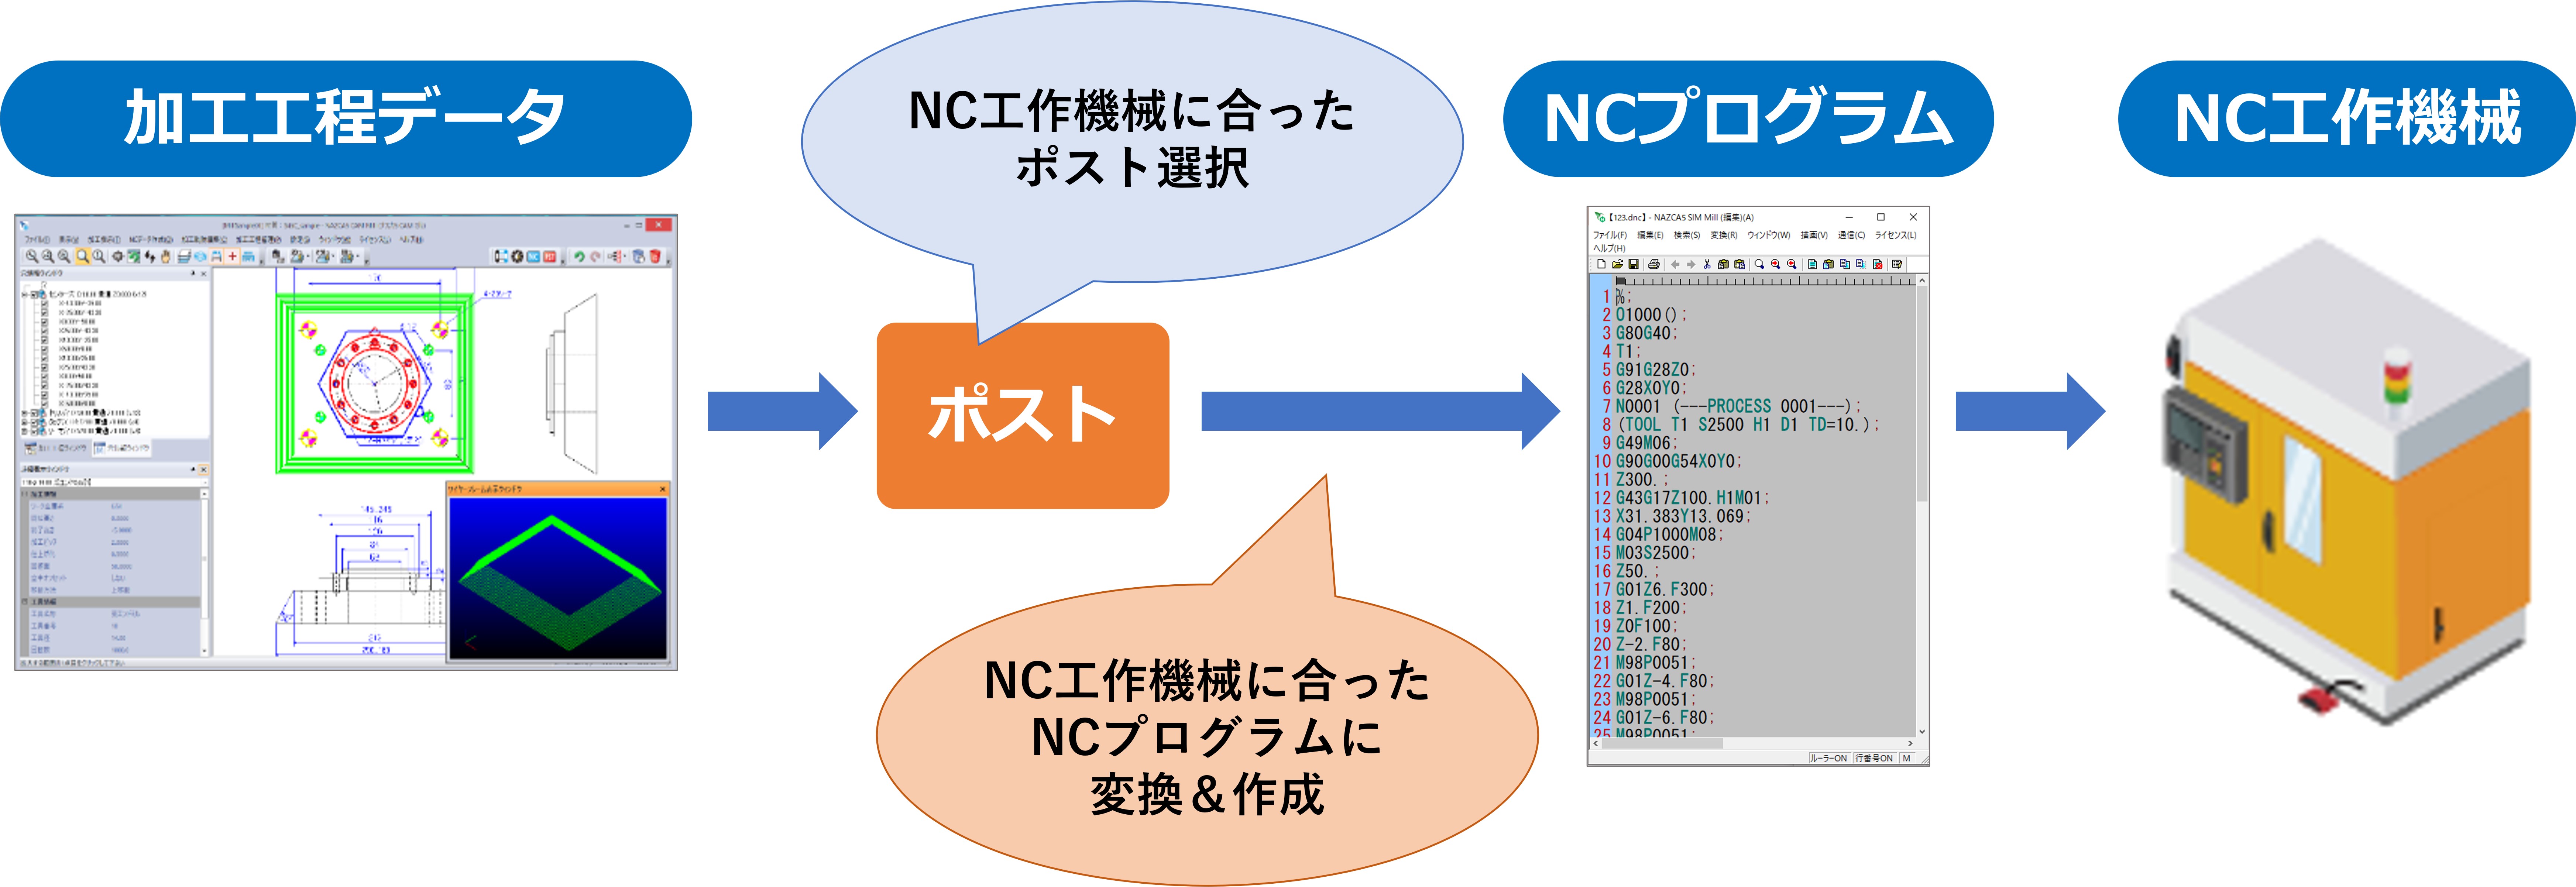 NCプログラム作成イメージ図